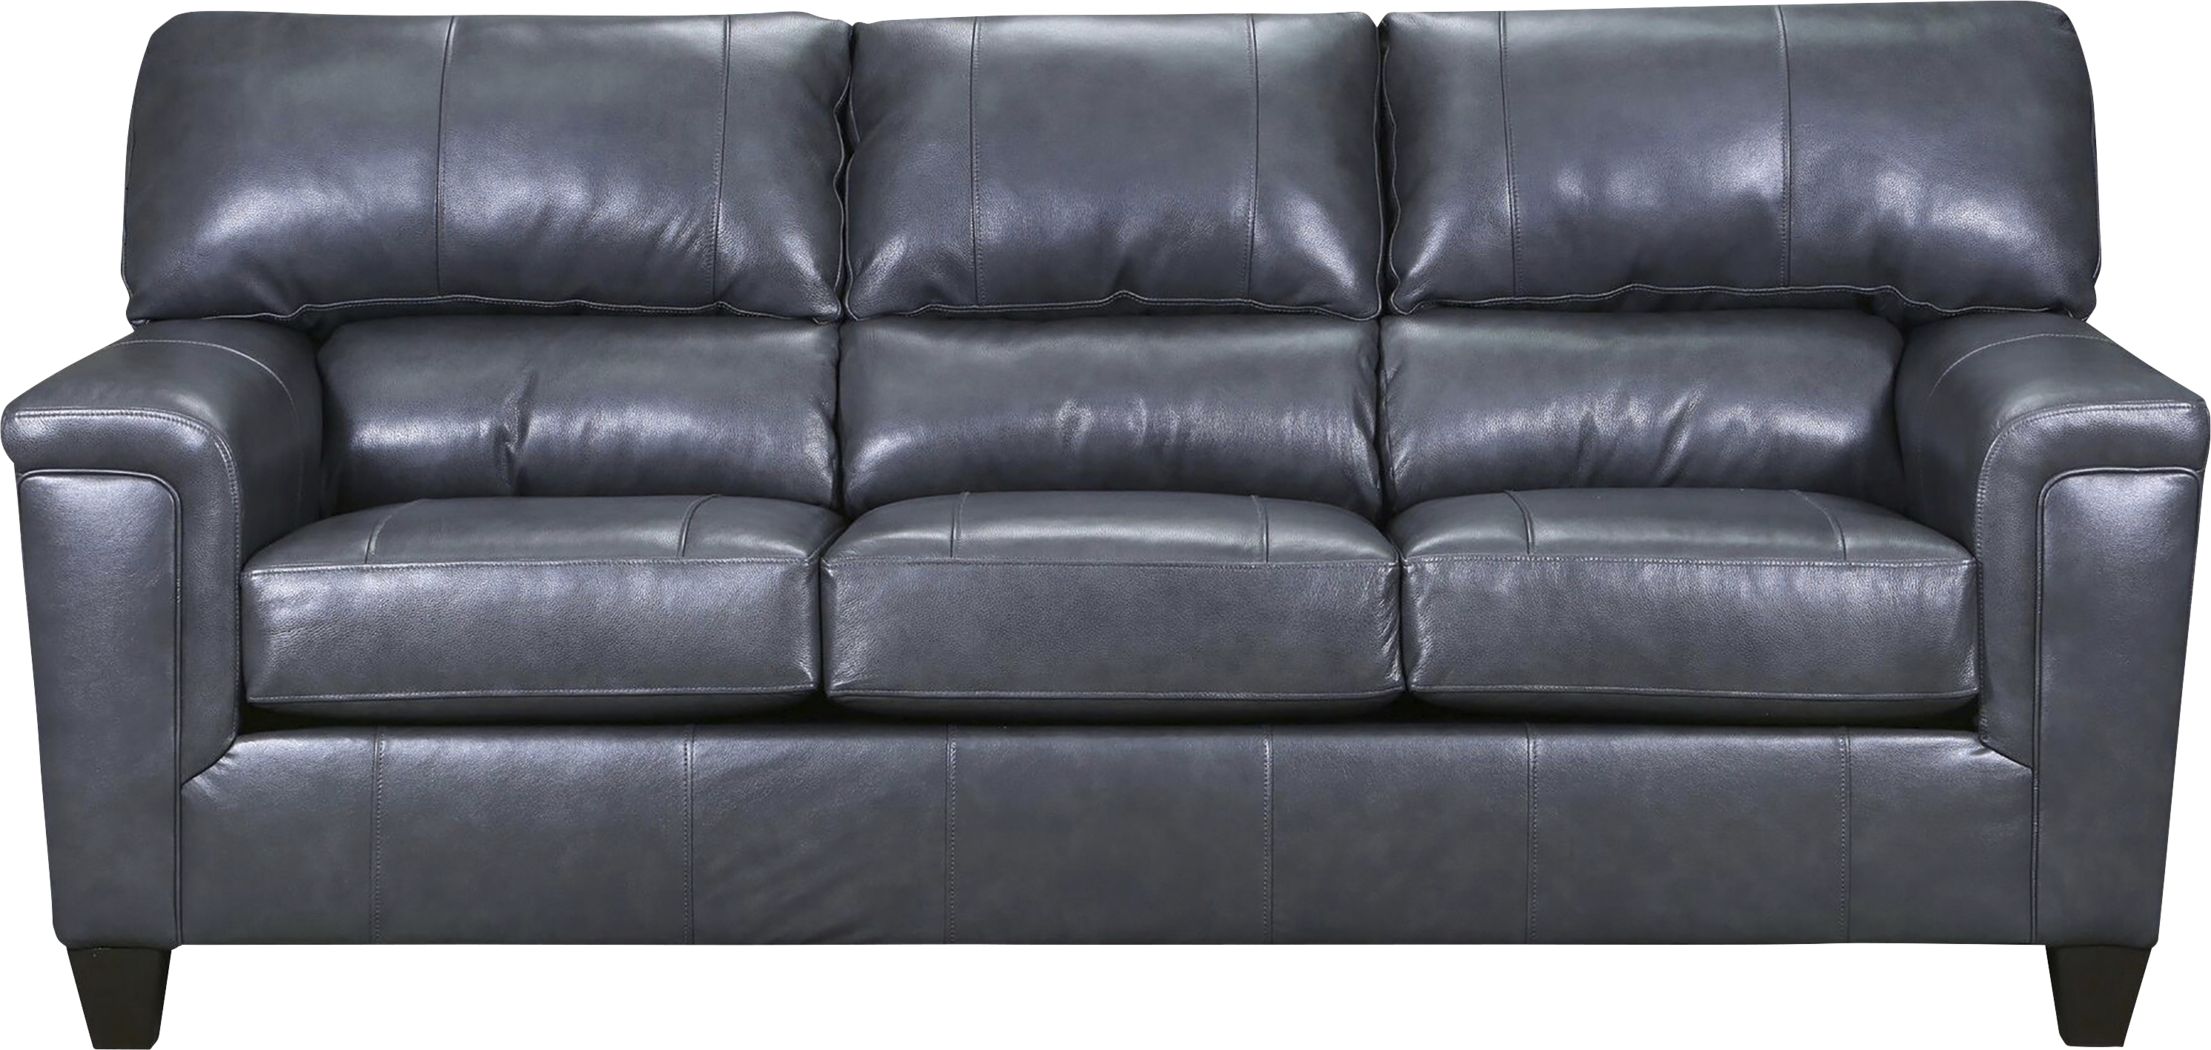 Leather Living Room Furniture, Leather Sofa Charlotte Nc